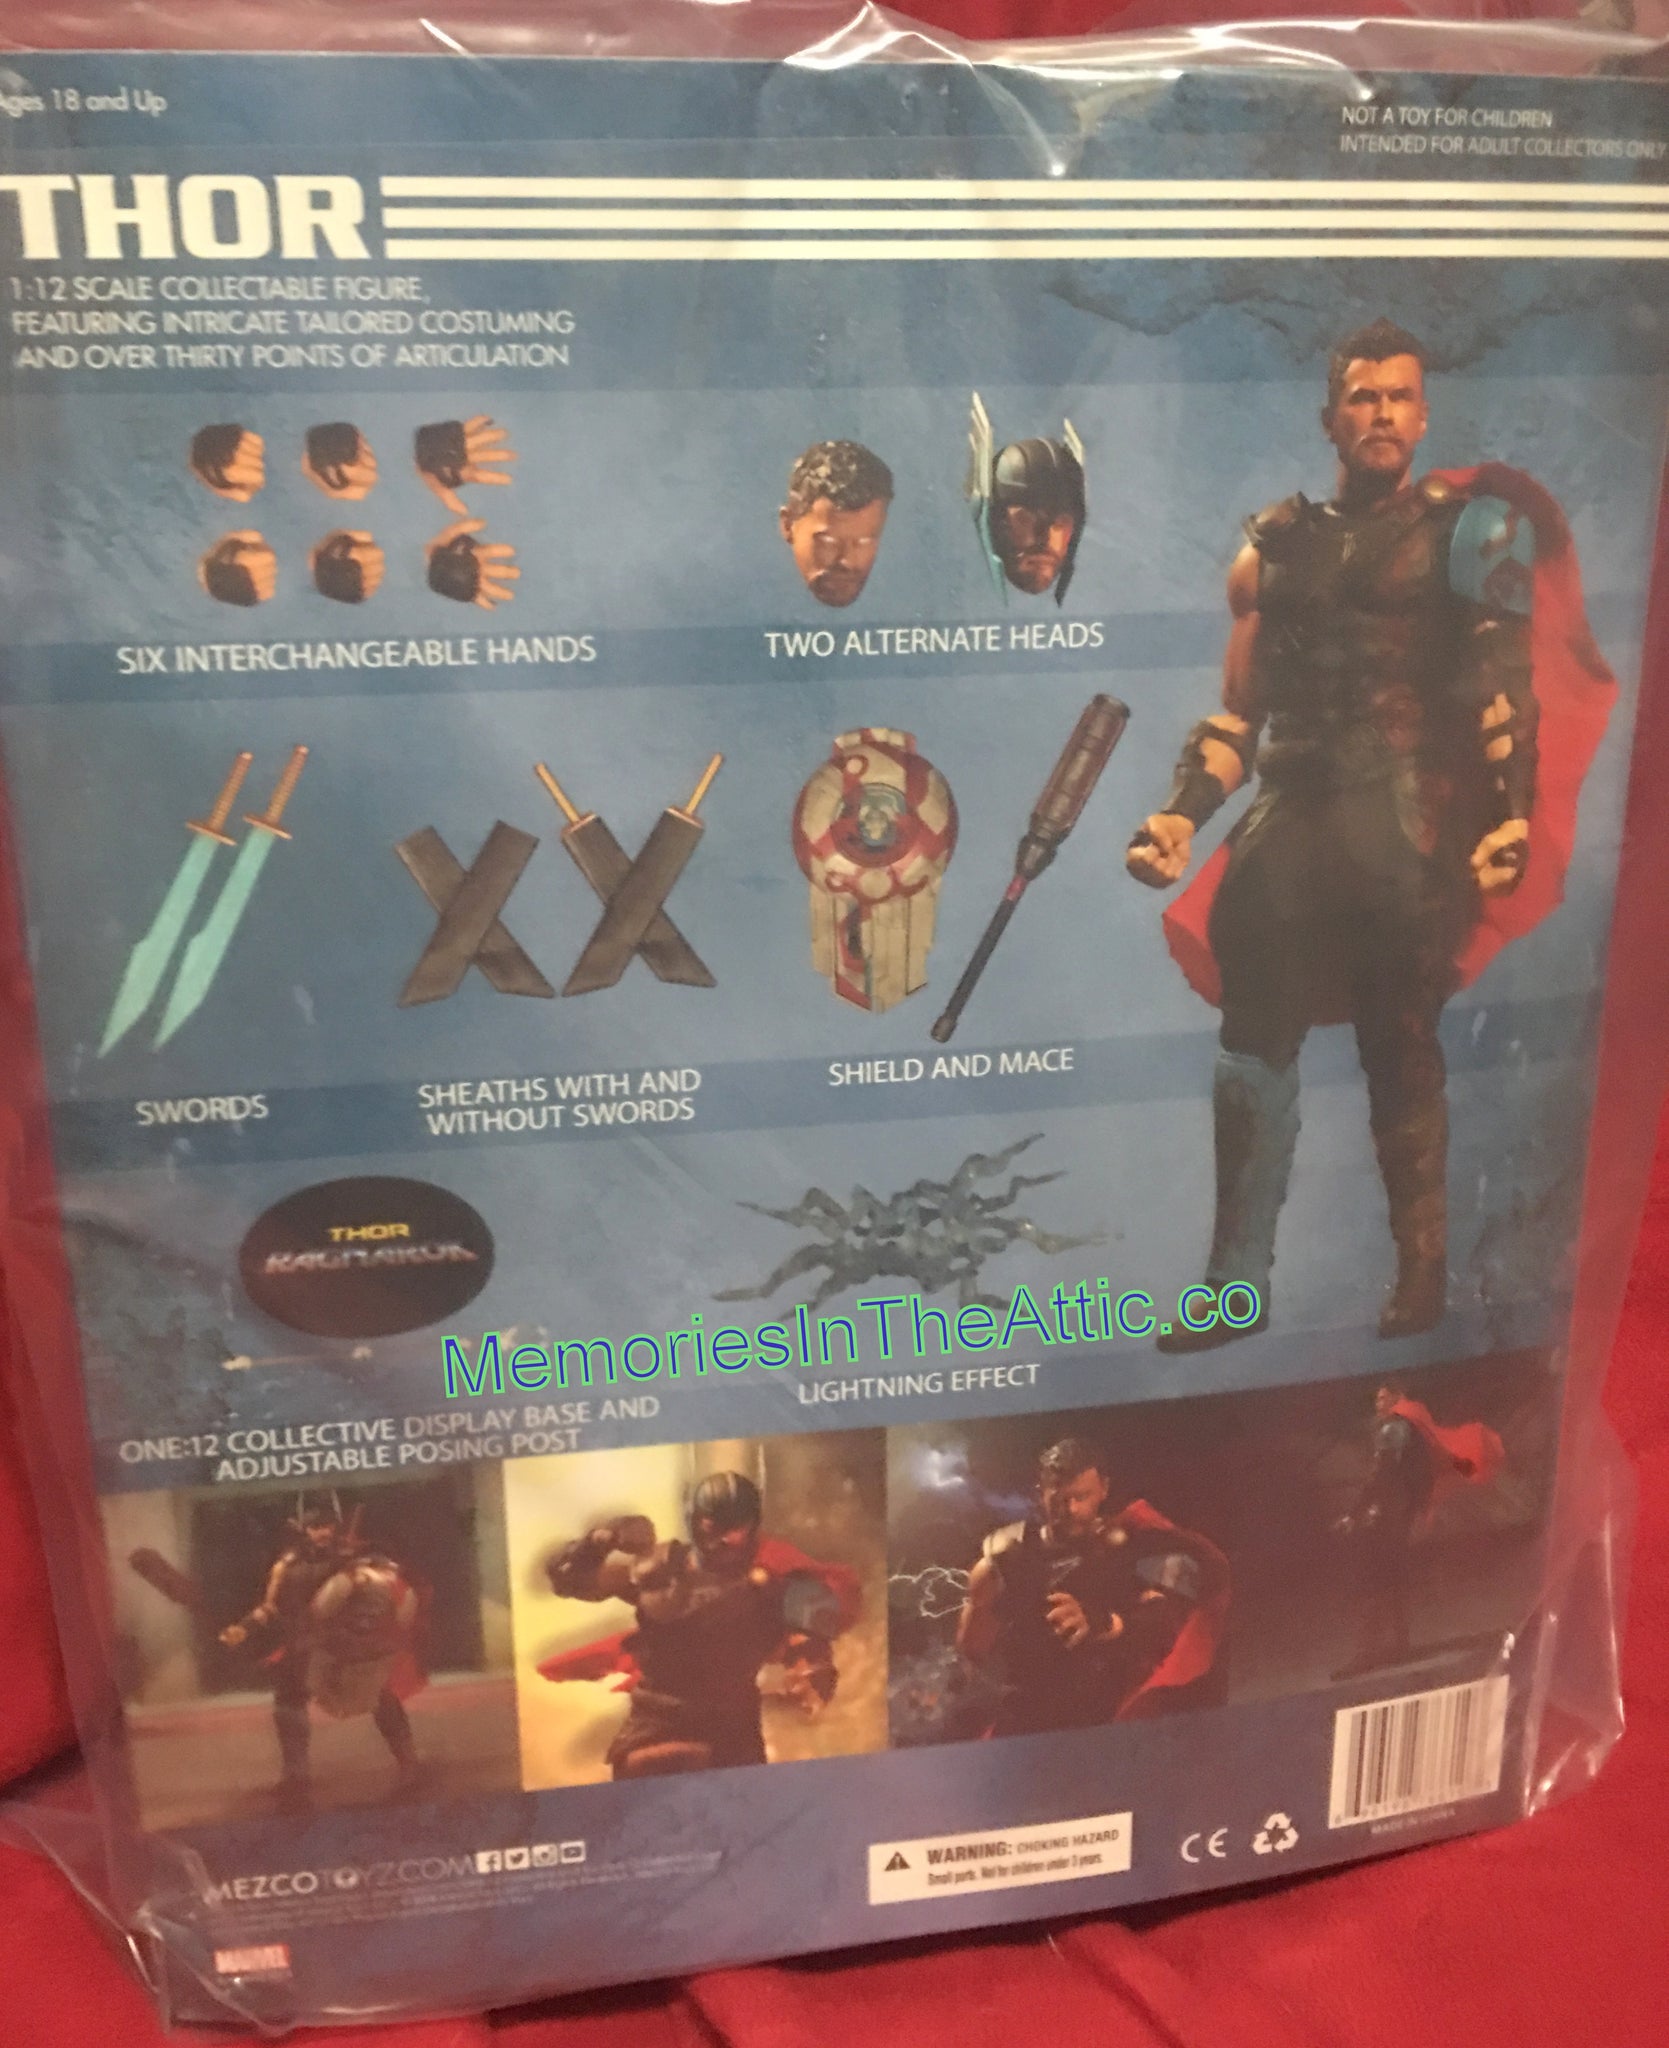  Mezco Toys One: 12 Collective: Marvel Thor Ragnarok